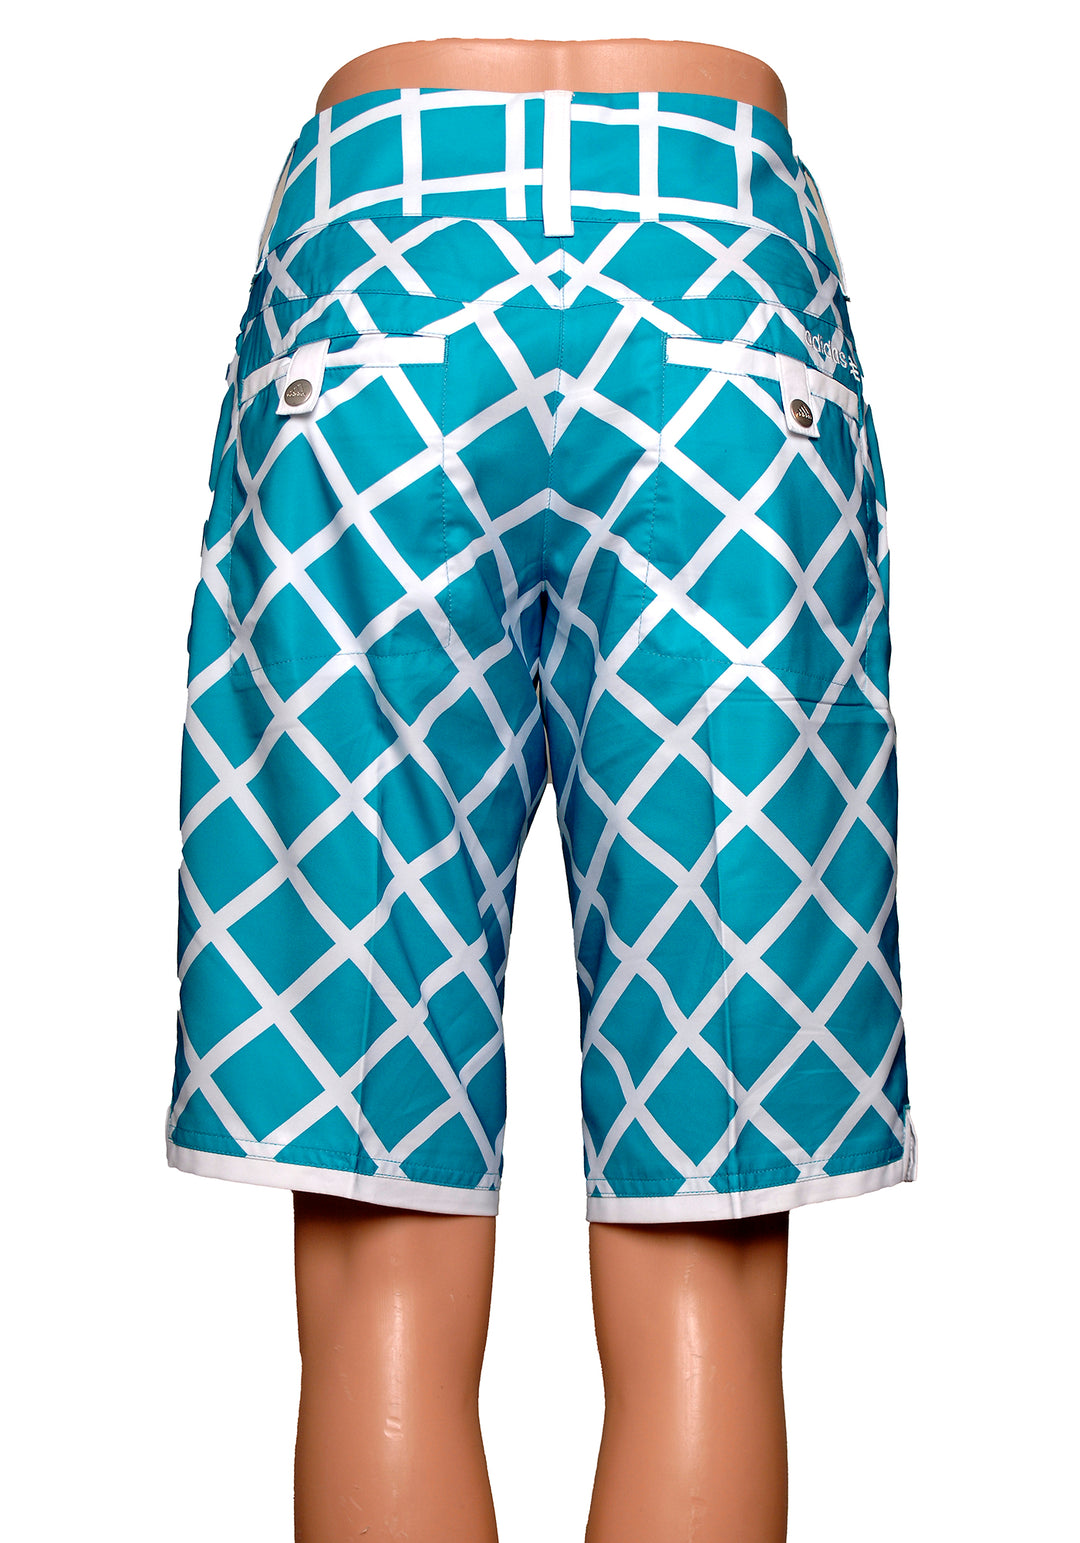 Adidas Bermuda Golf Short - Teal - Size 4 - Skorzie